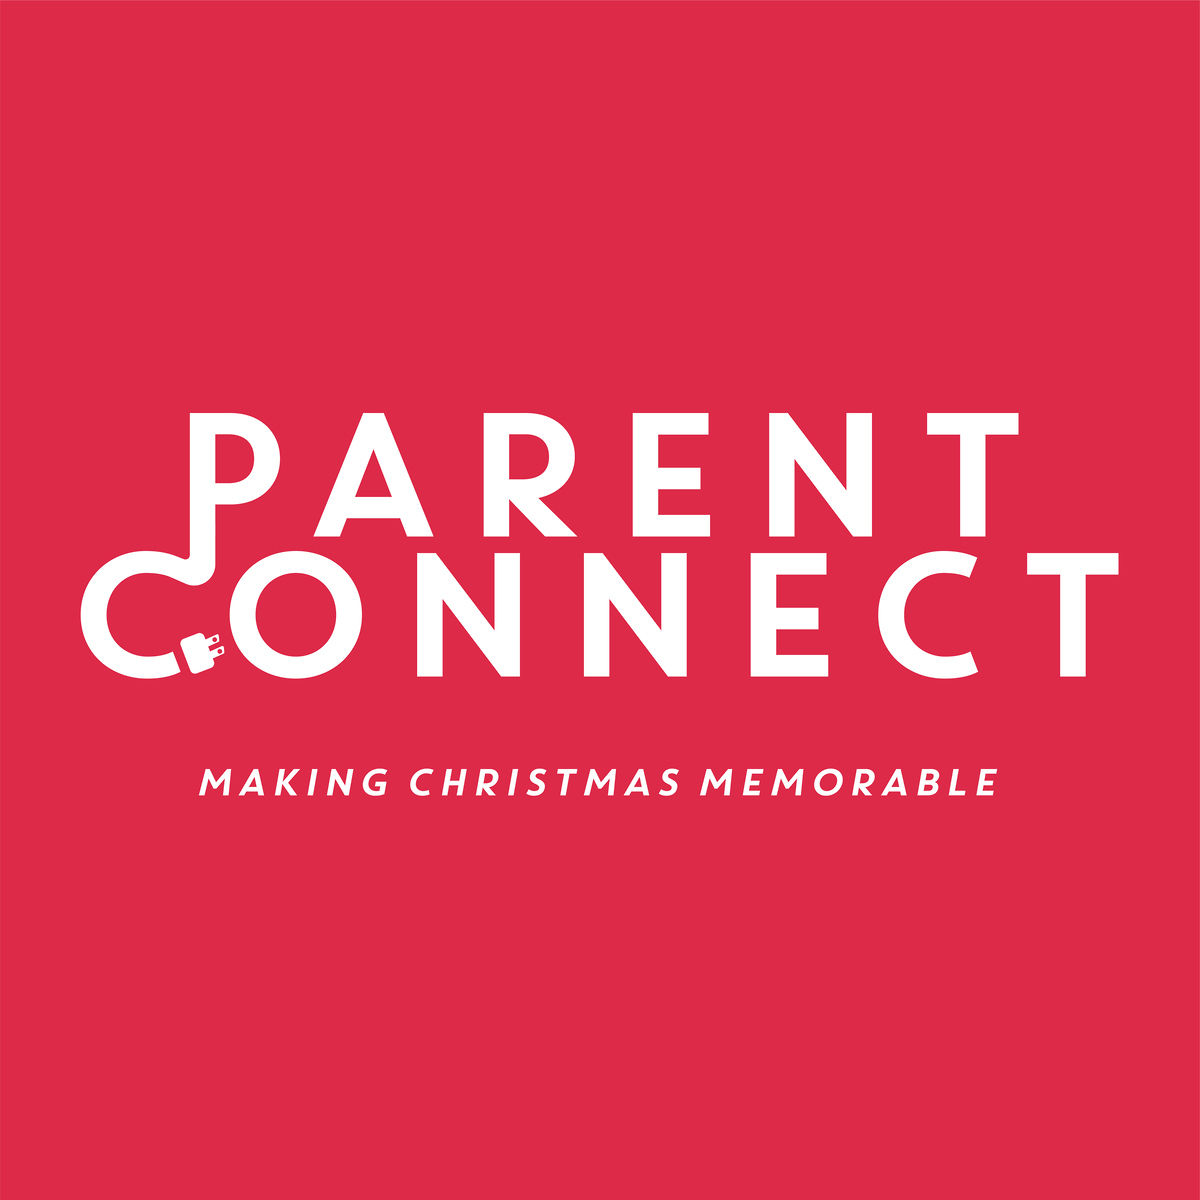 Parent Connect: Making Christmas Memorable